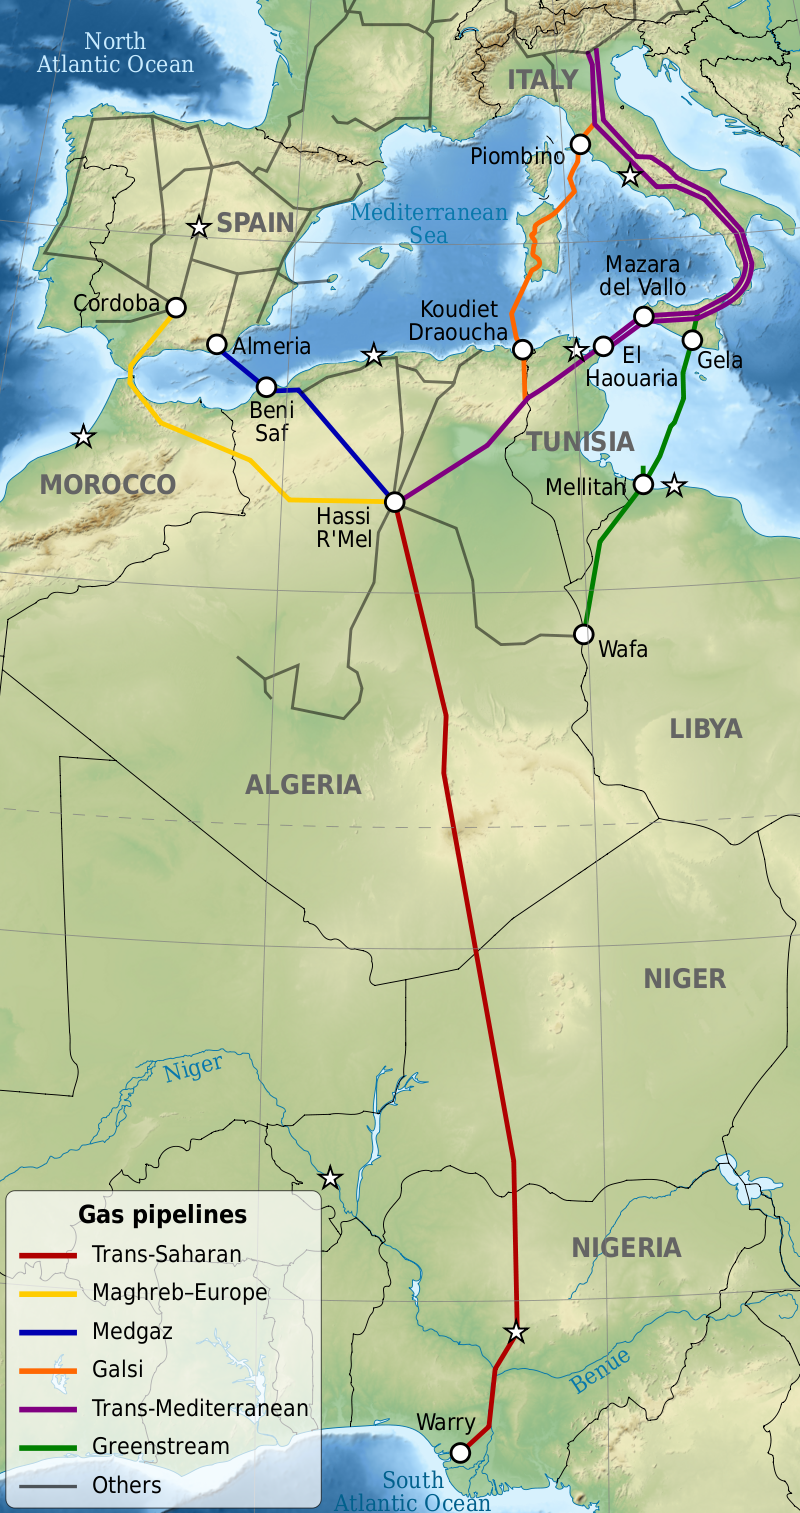 800px-Gas_pipelines_across_Mediterranee_and_Sahara_map-en.svg